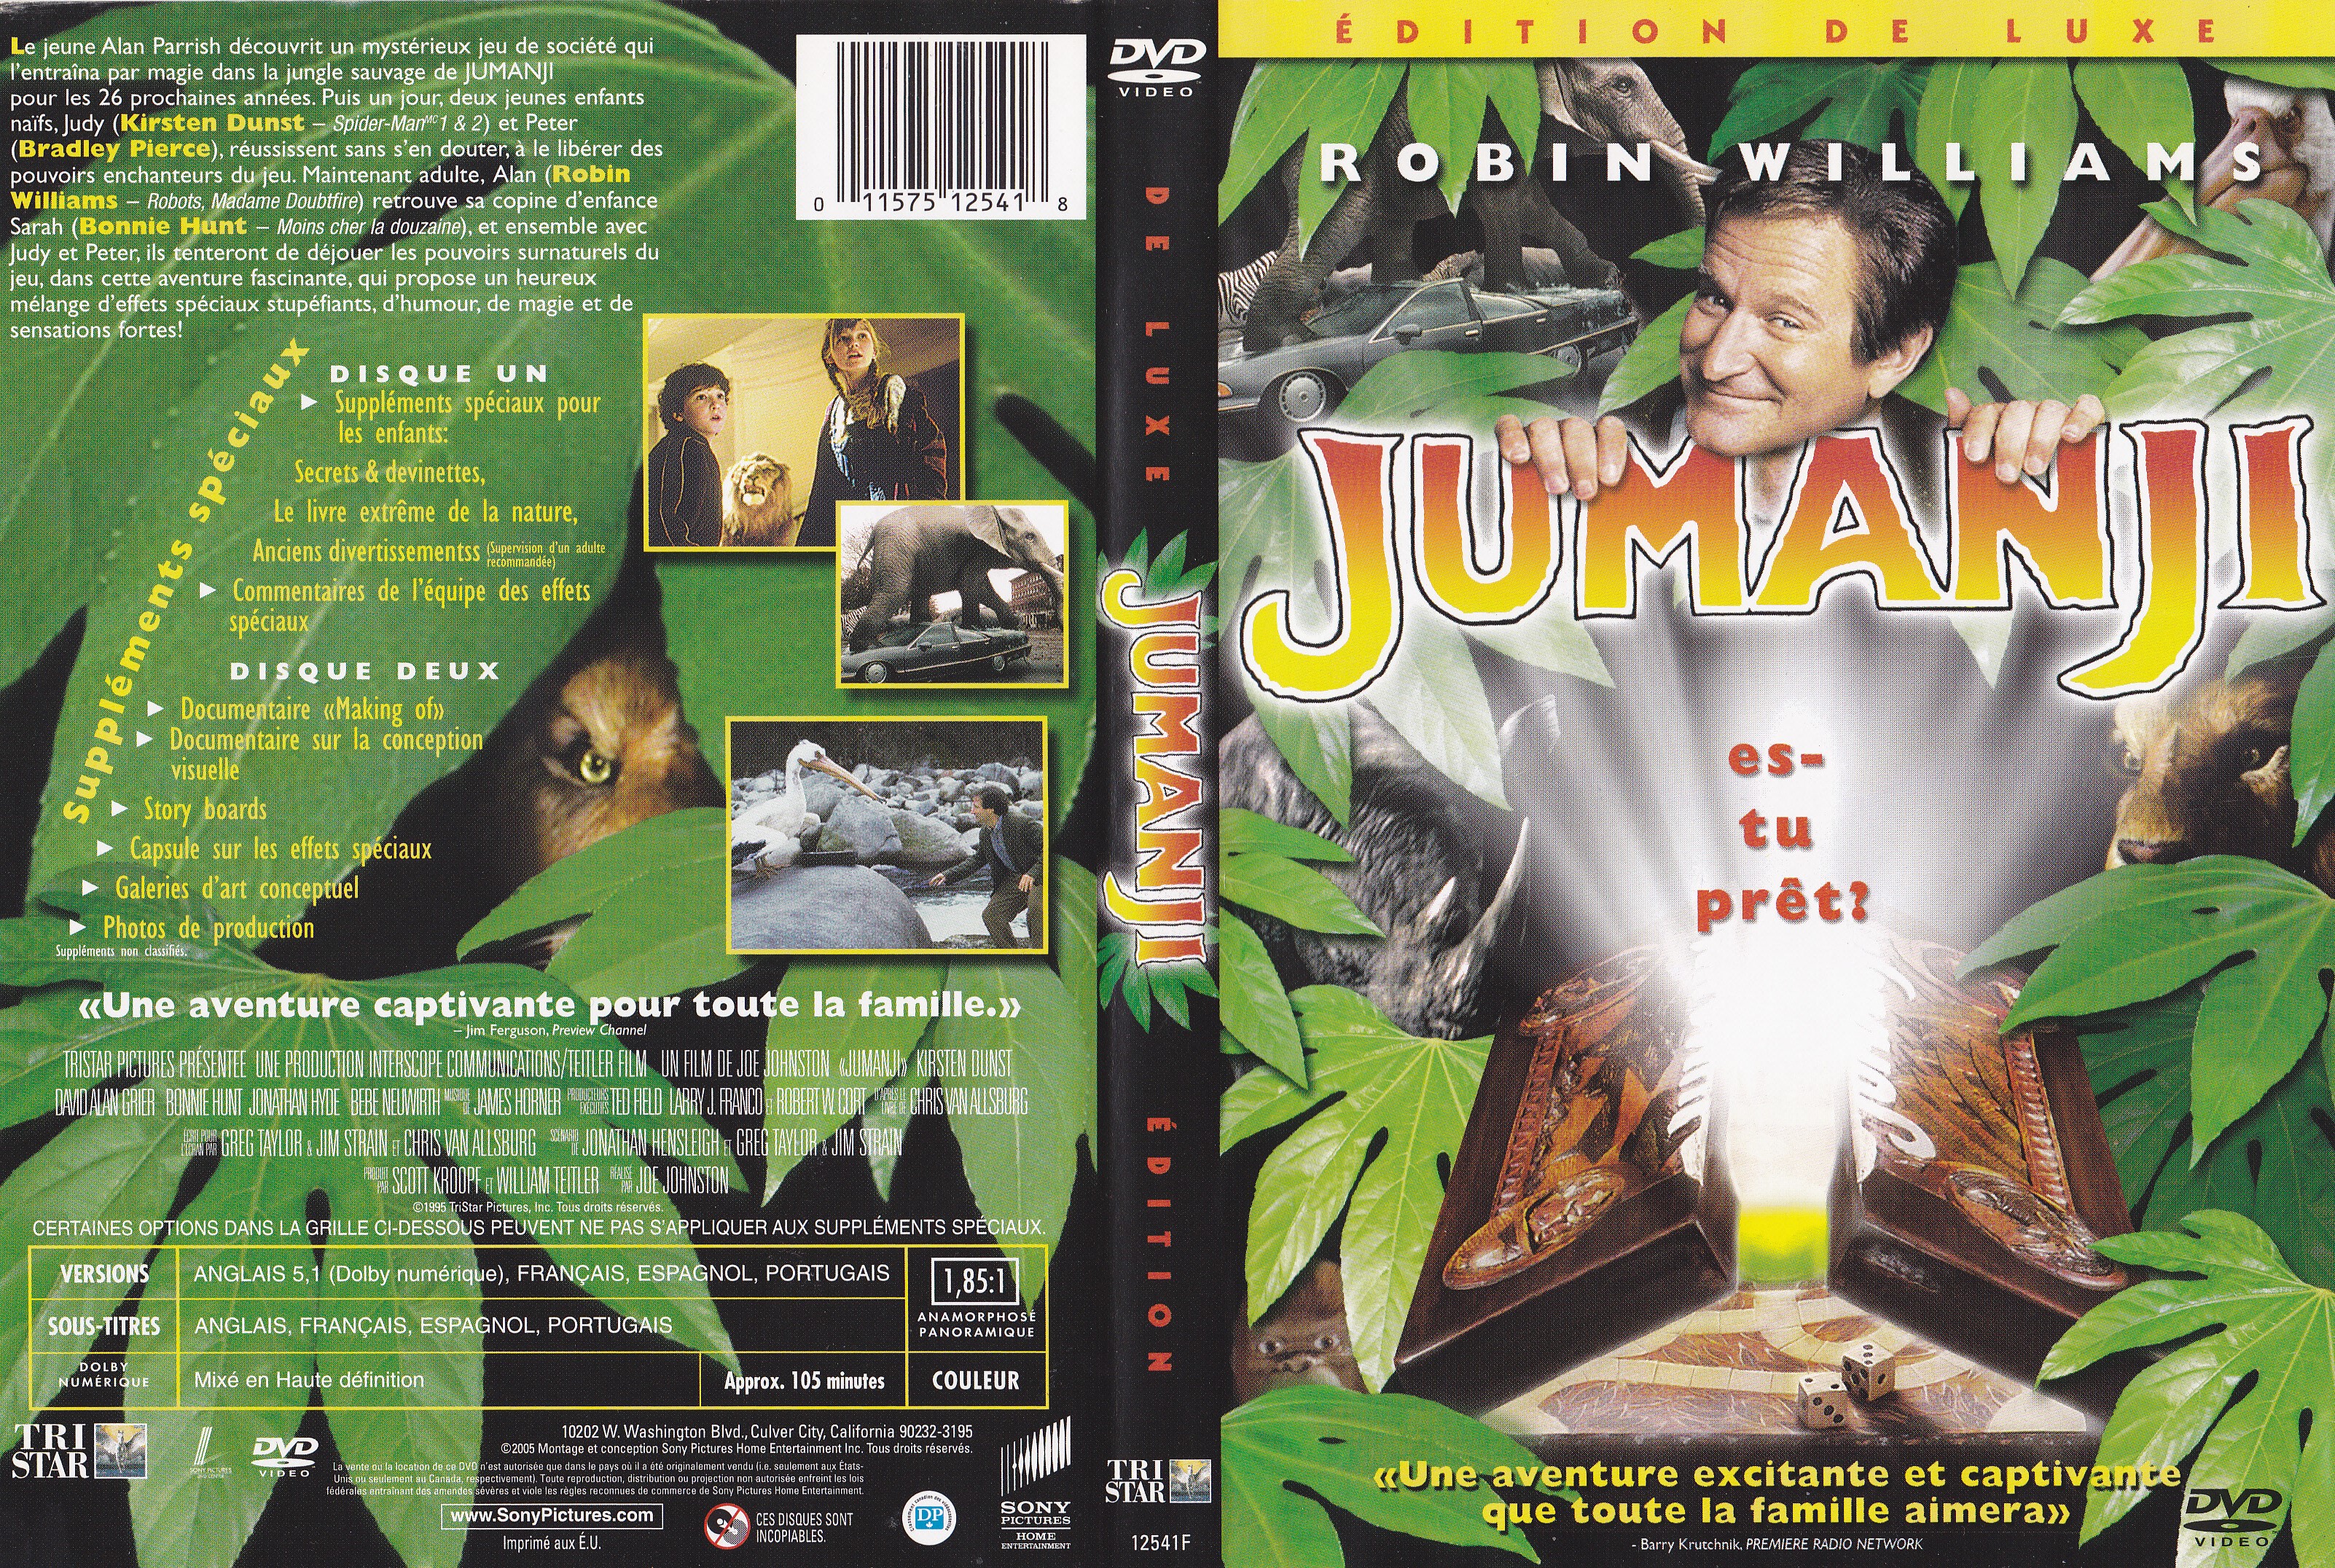 Jaquette DVD Jumanji (Canadienne)